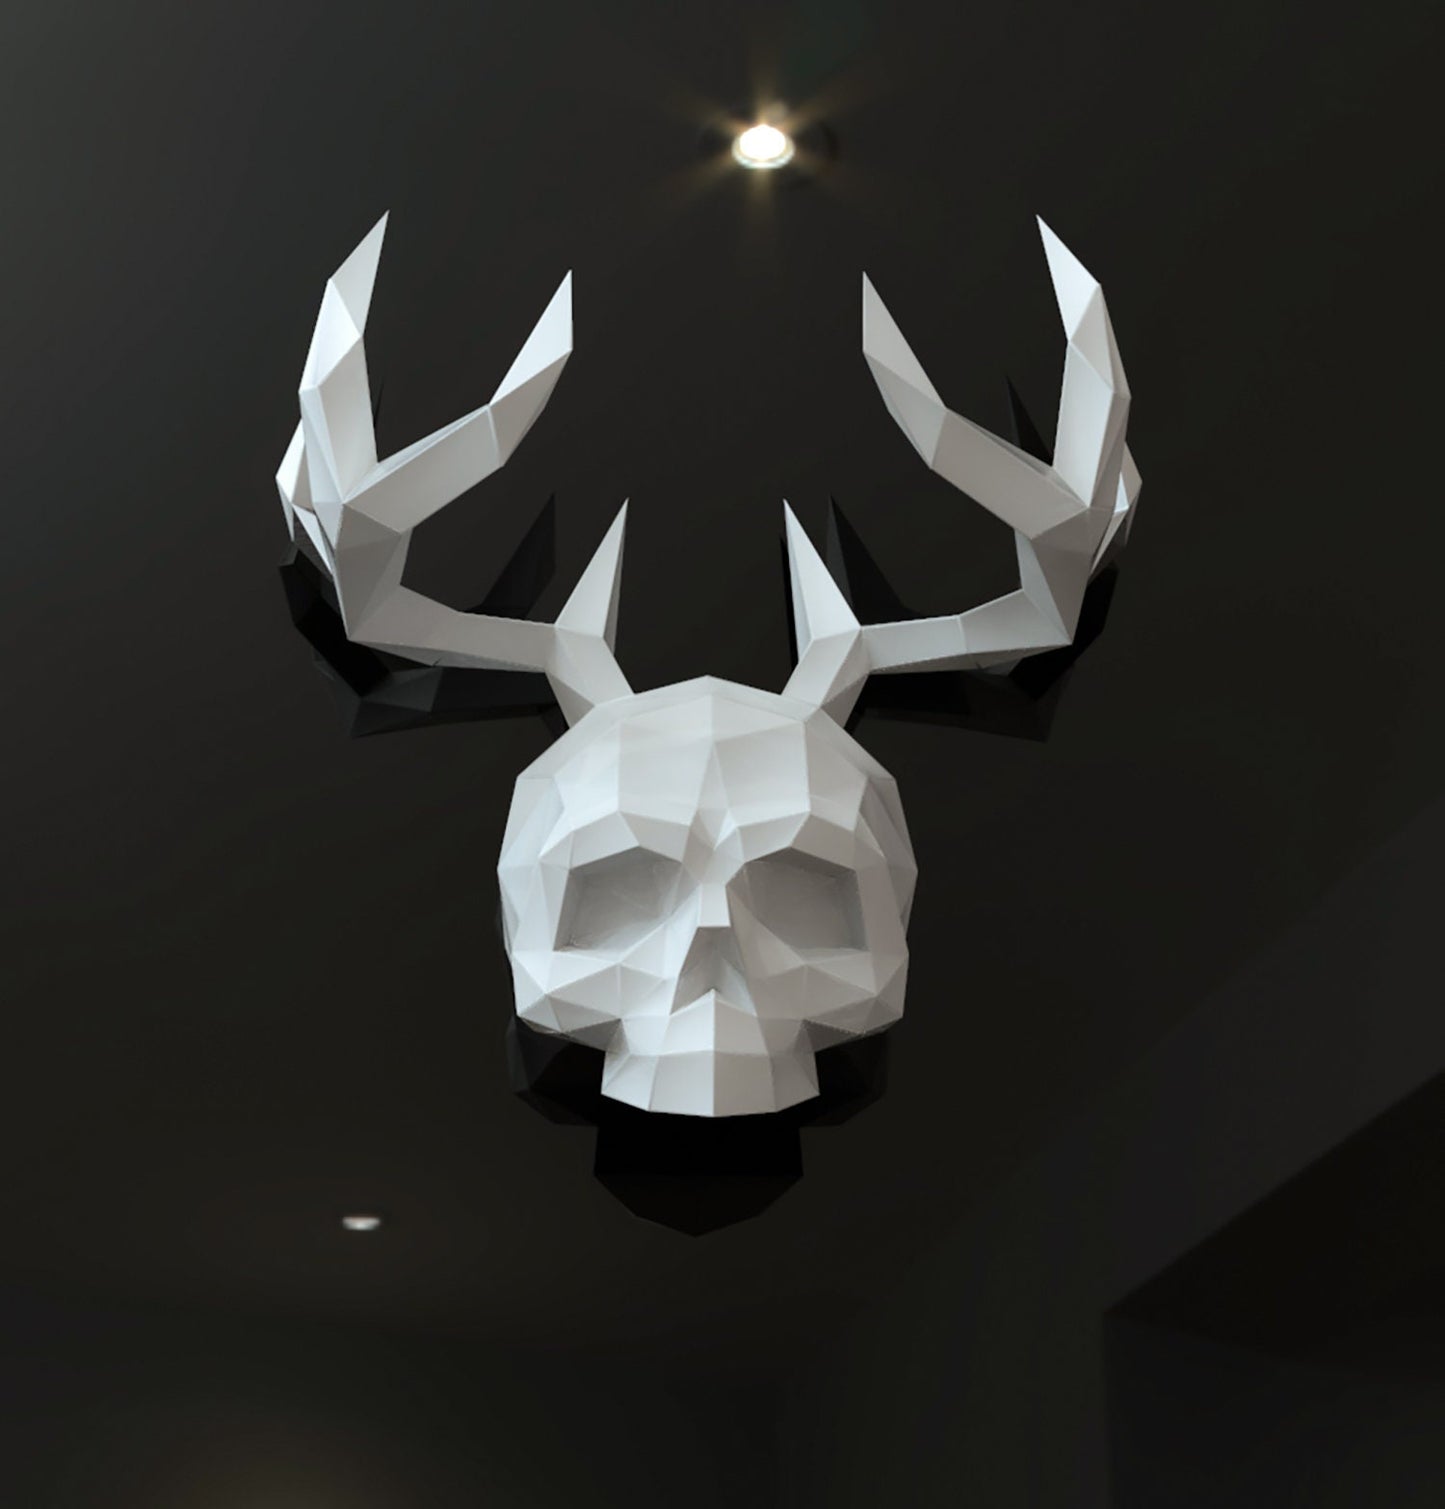 Skull with Horns wall decor